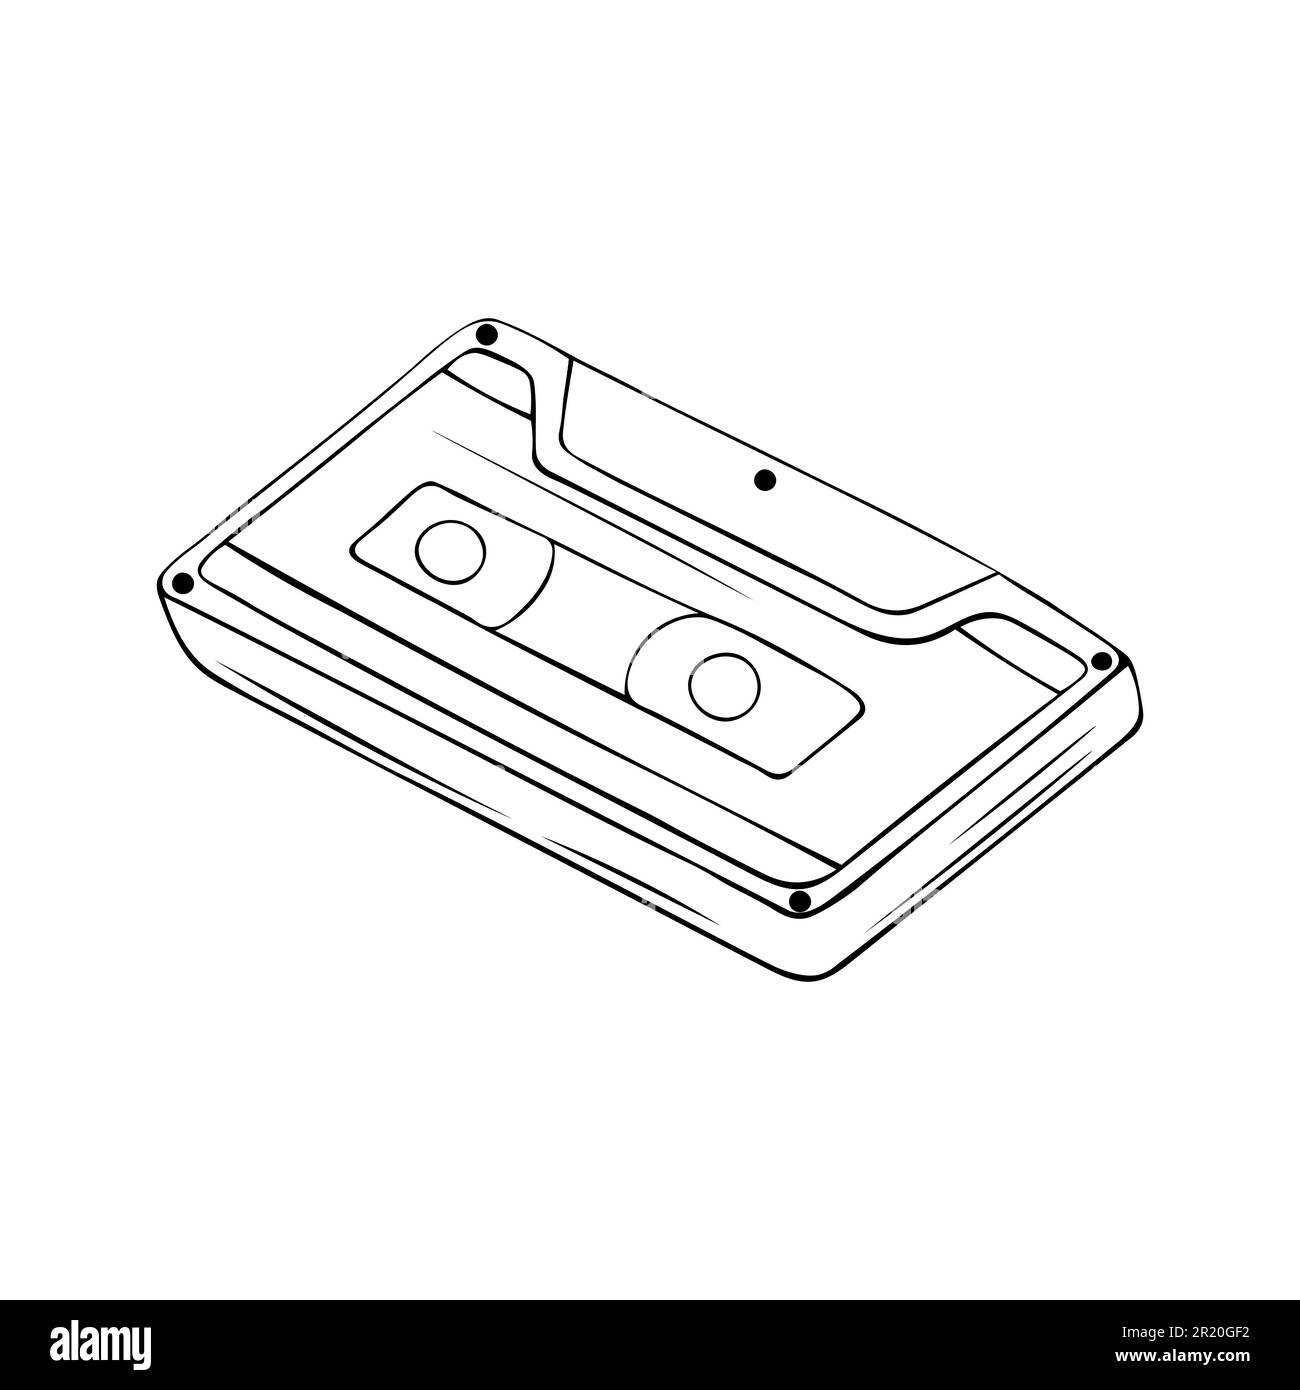 Hand drawn Cassette tape on a white background. Vector illustration. Stock Vector